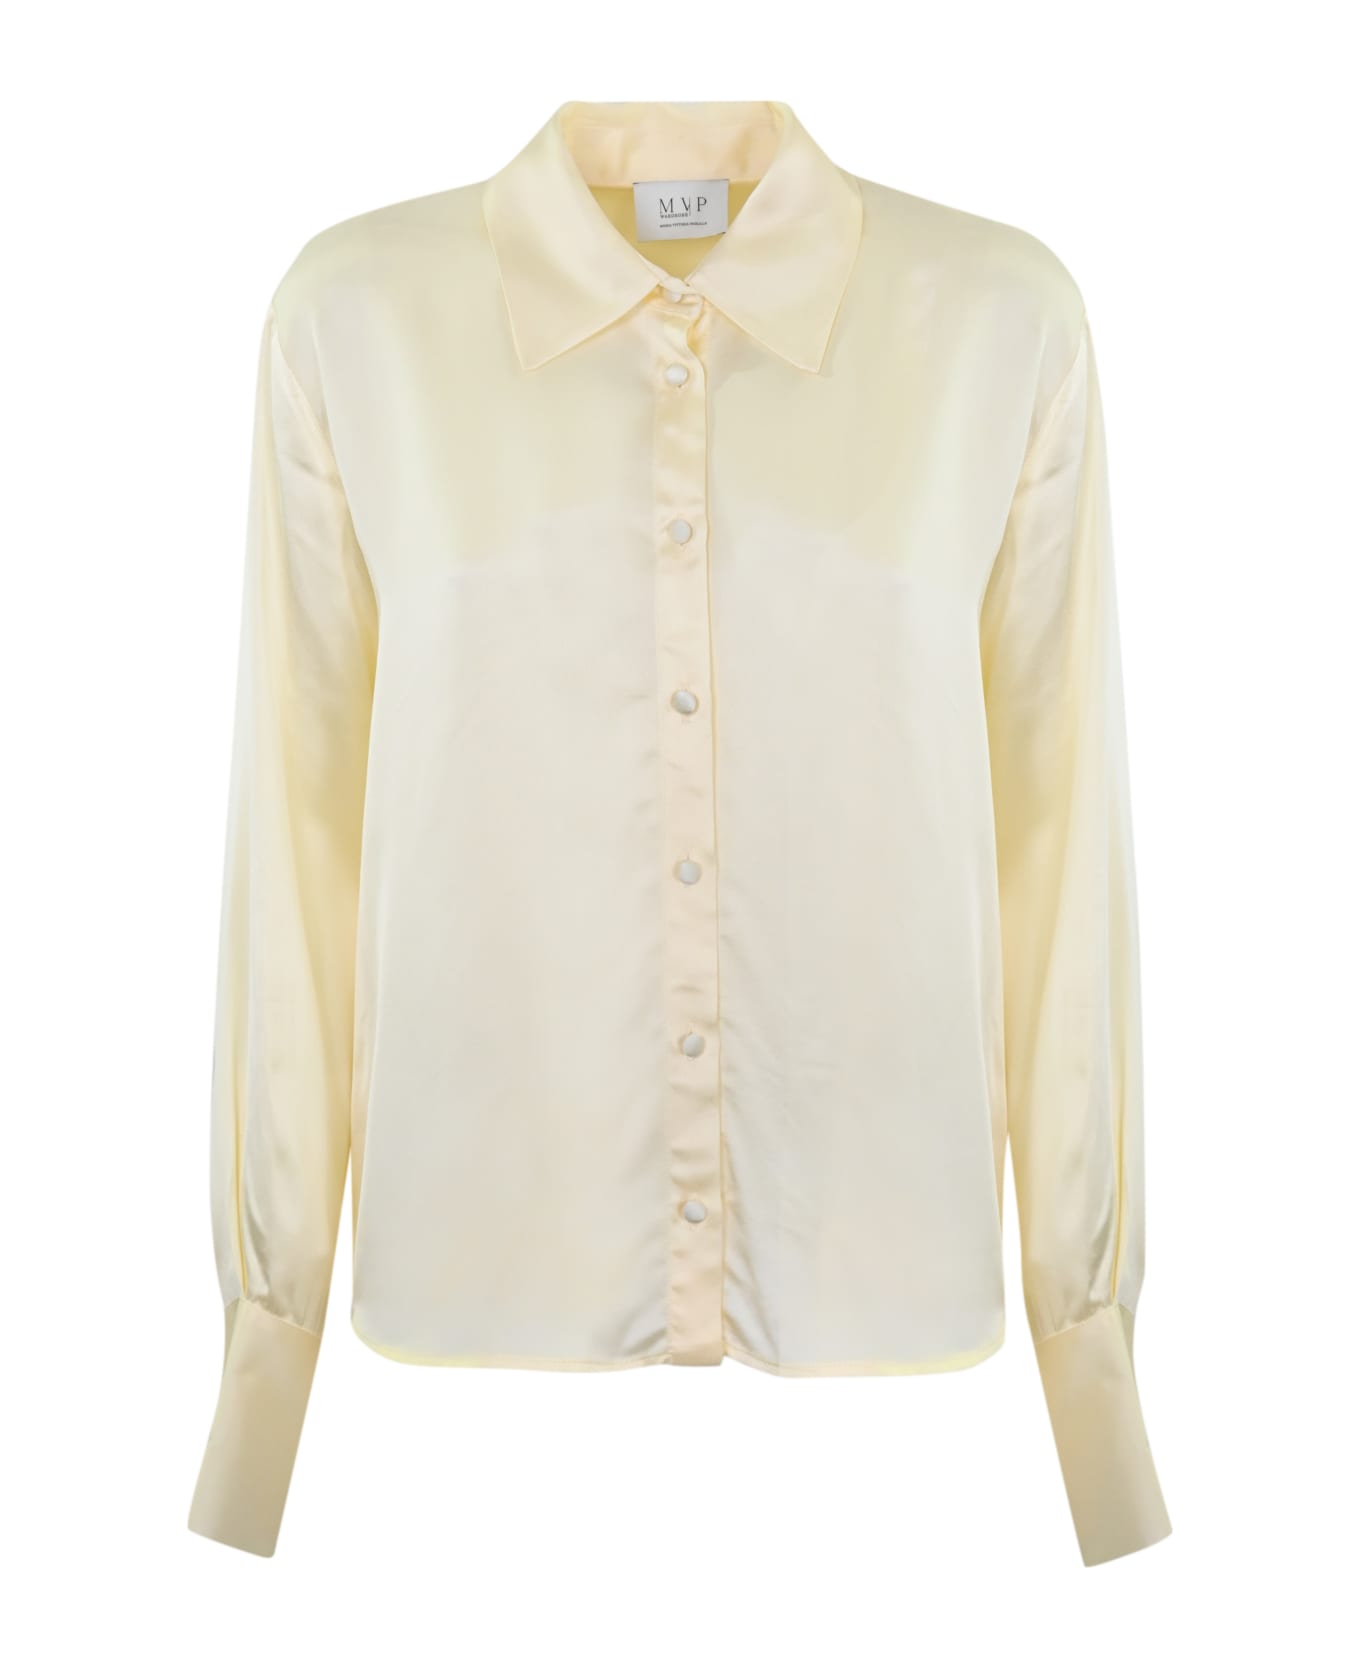 MVP Wardrobe Grand Ribaud Shirt In Viscose - Cream シャツ